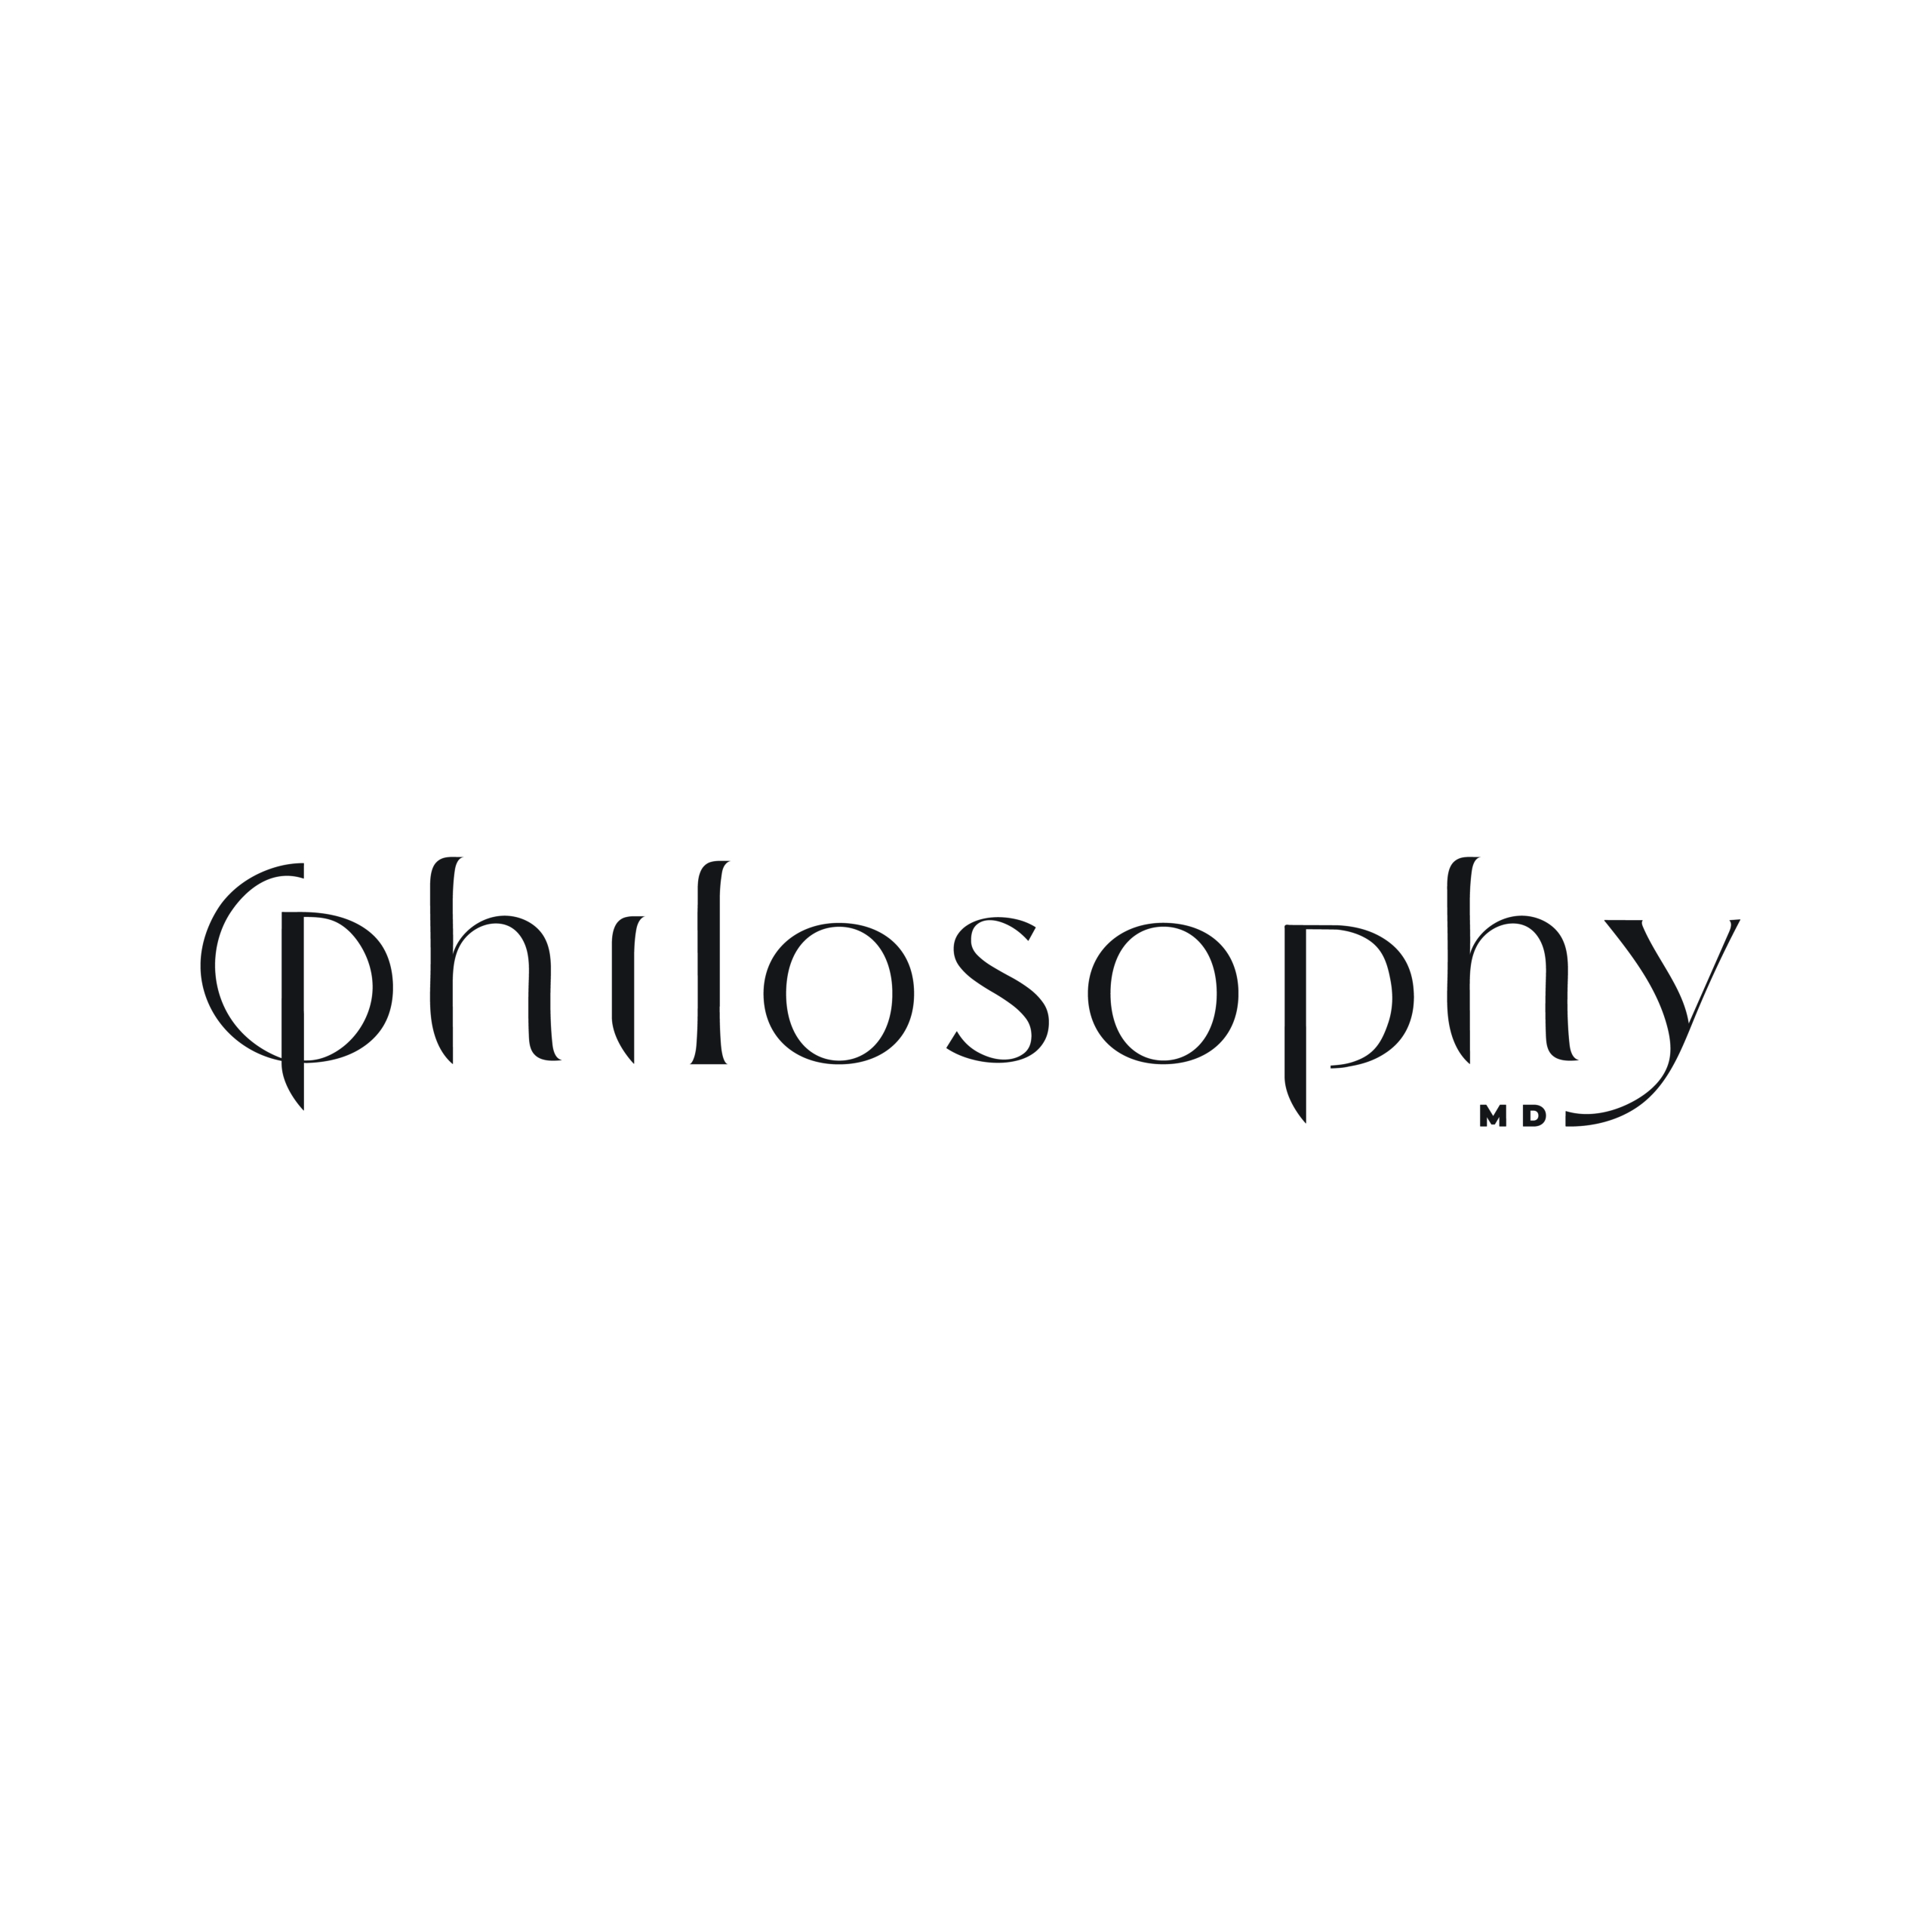 Philosophy MD logo